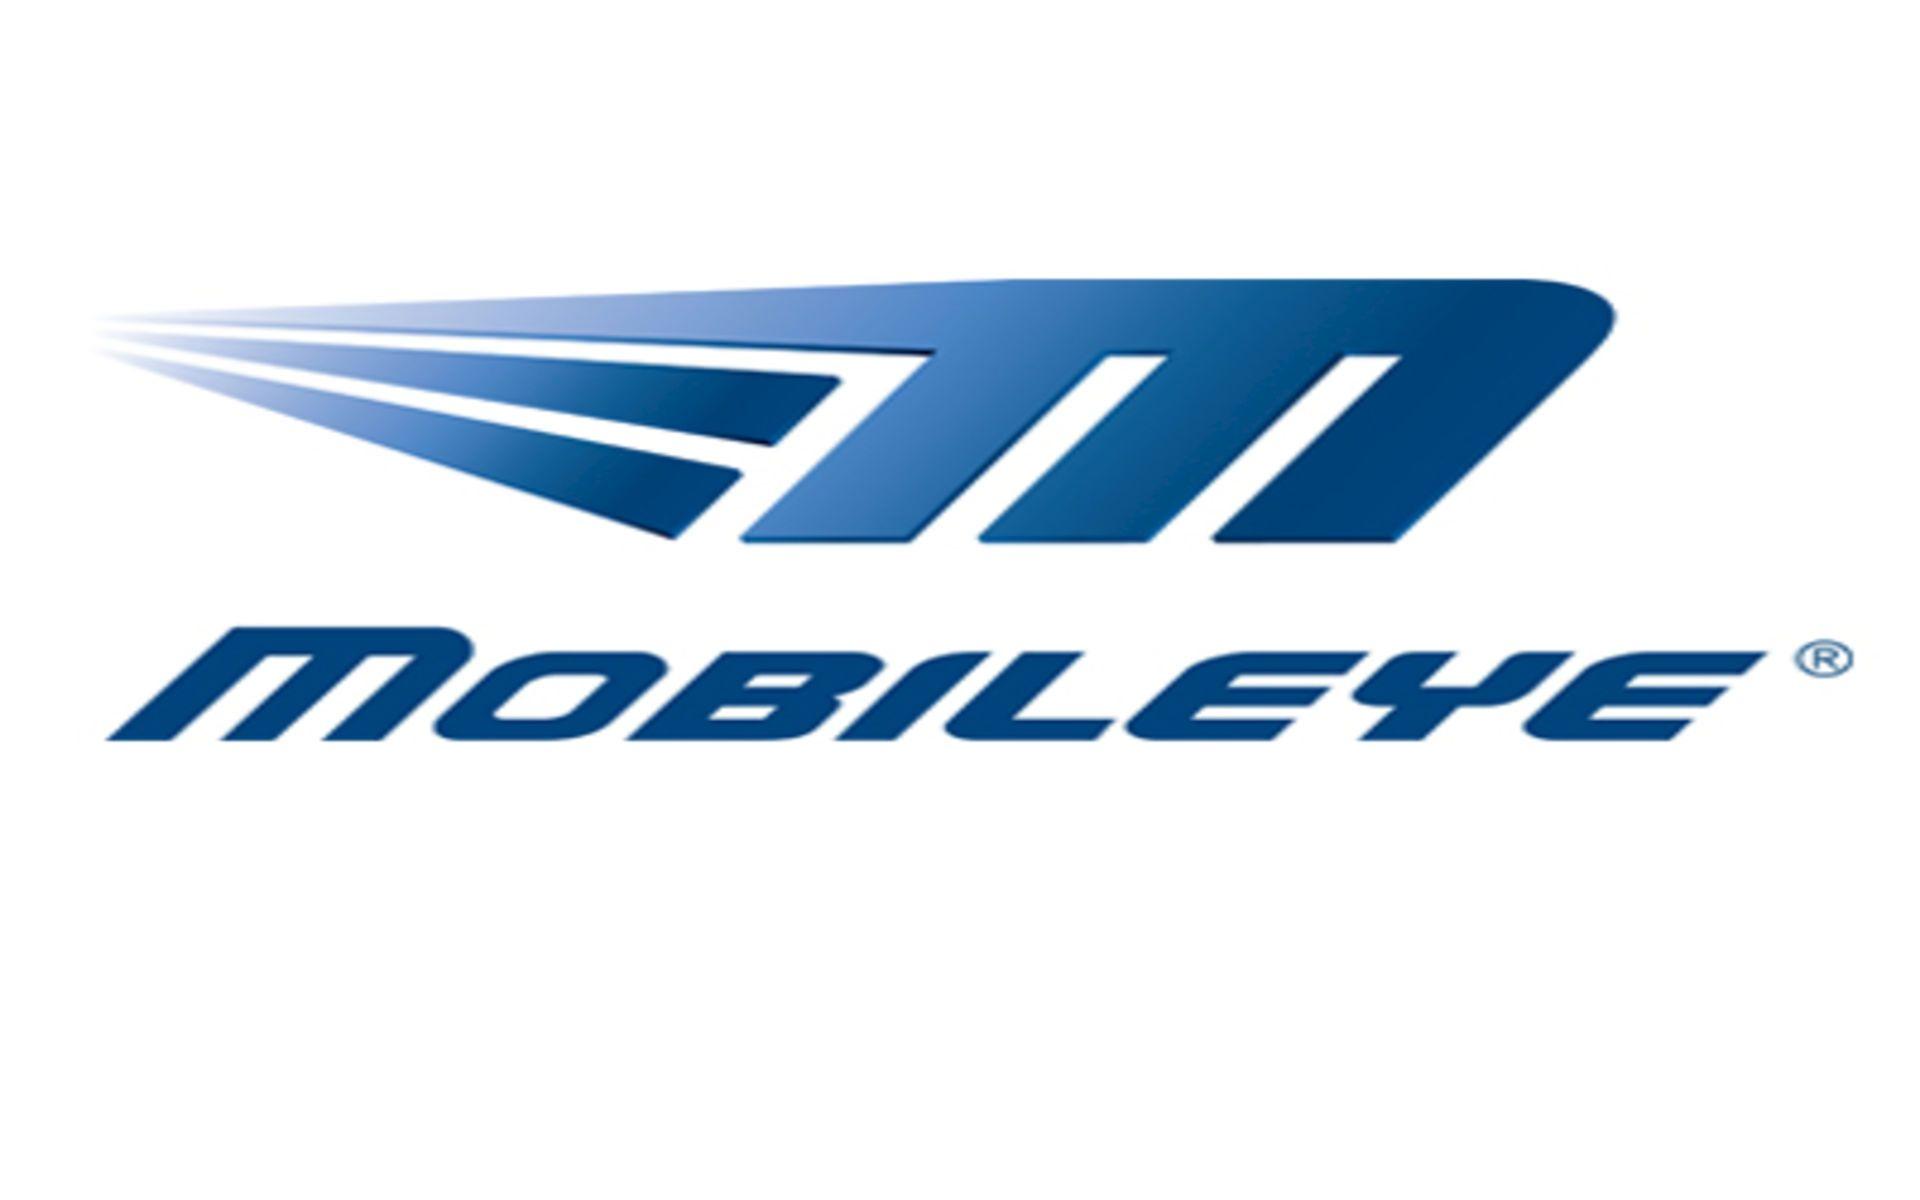 Mobileye Logo - Mobileye Logos